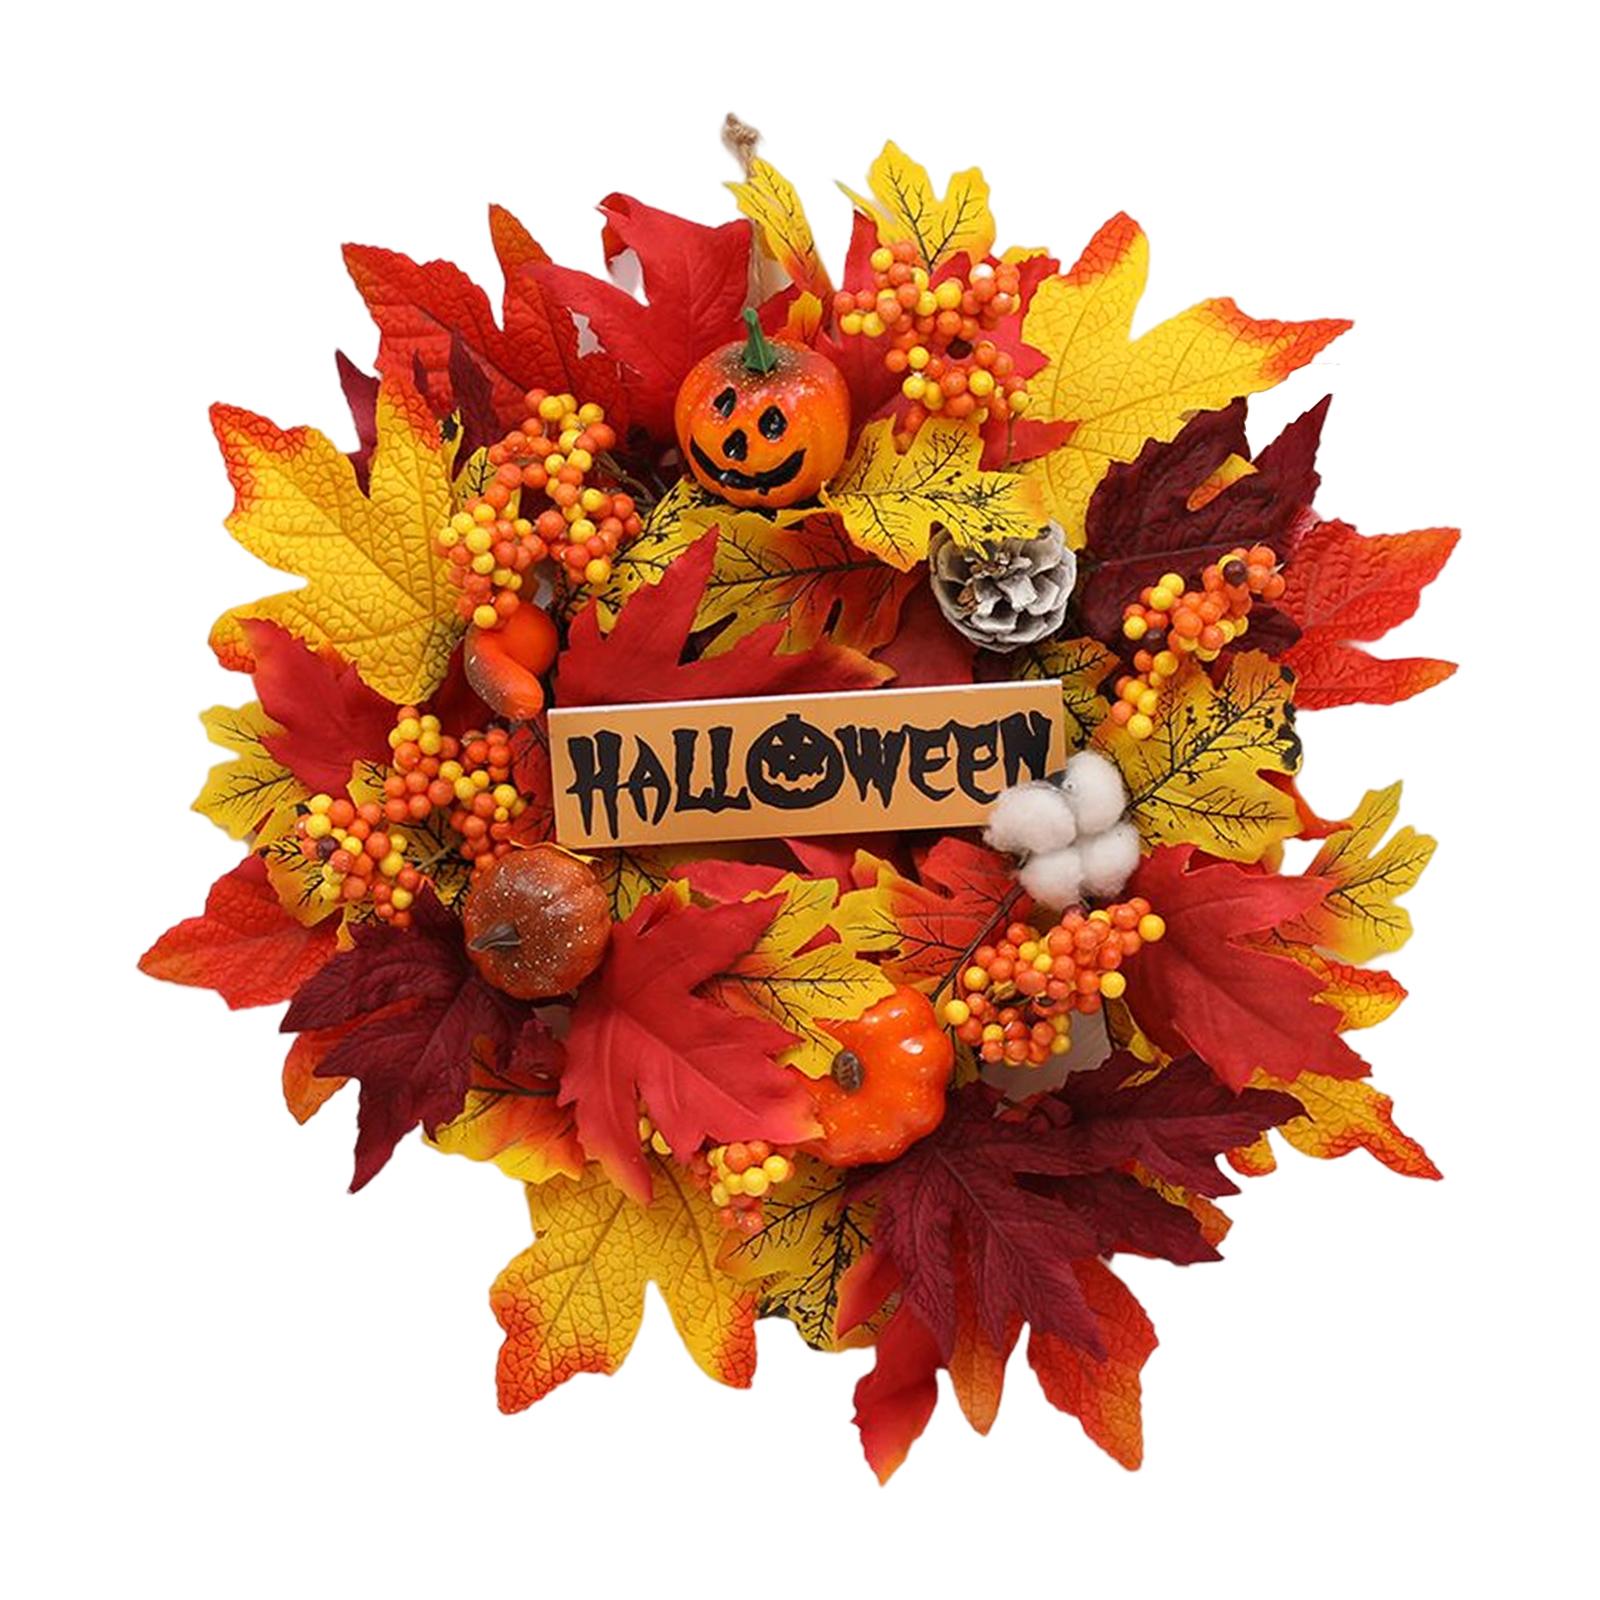 Halloween Fall Wreath Artificial Garland 16inch Wide Application Durable